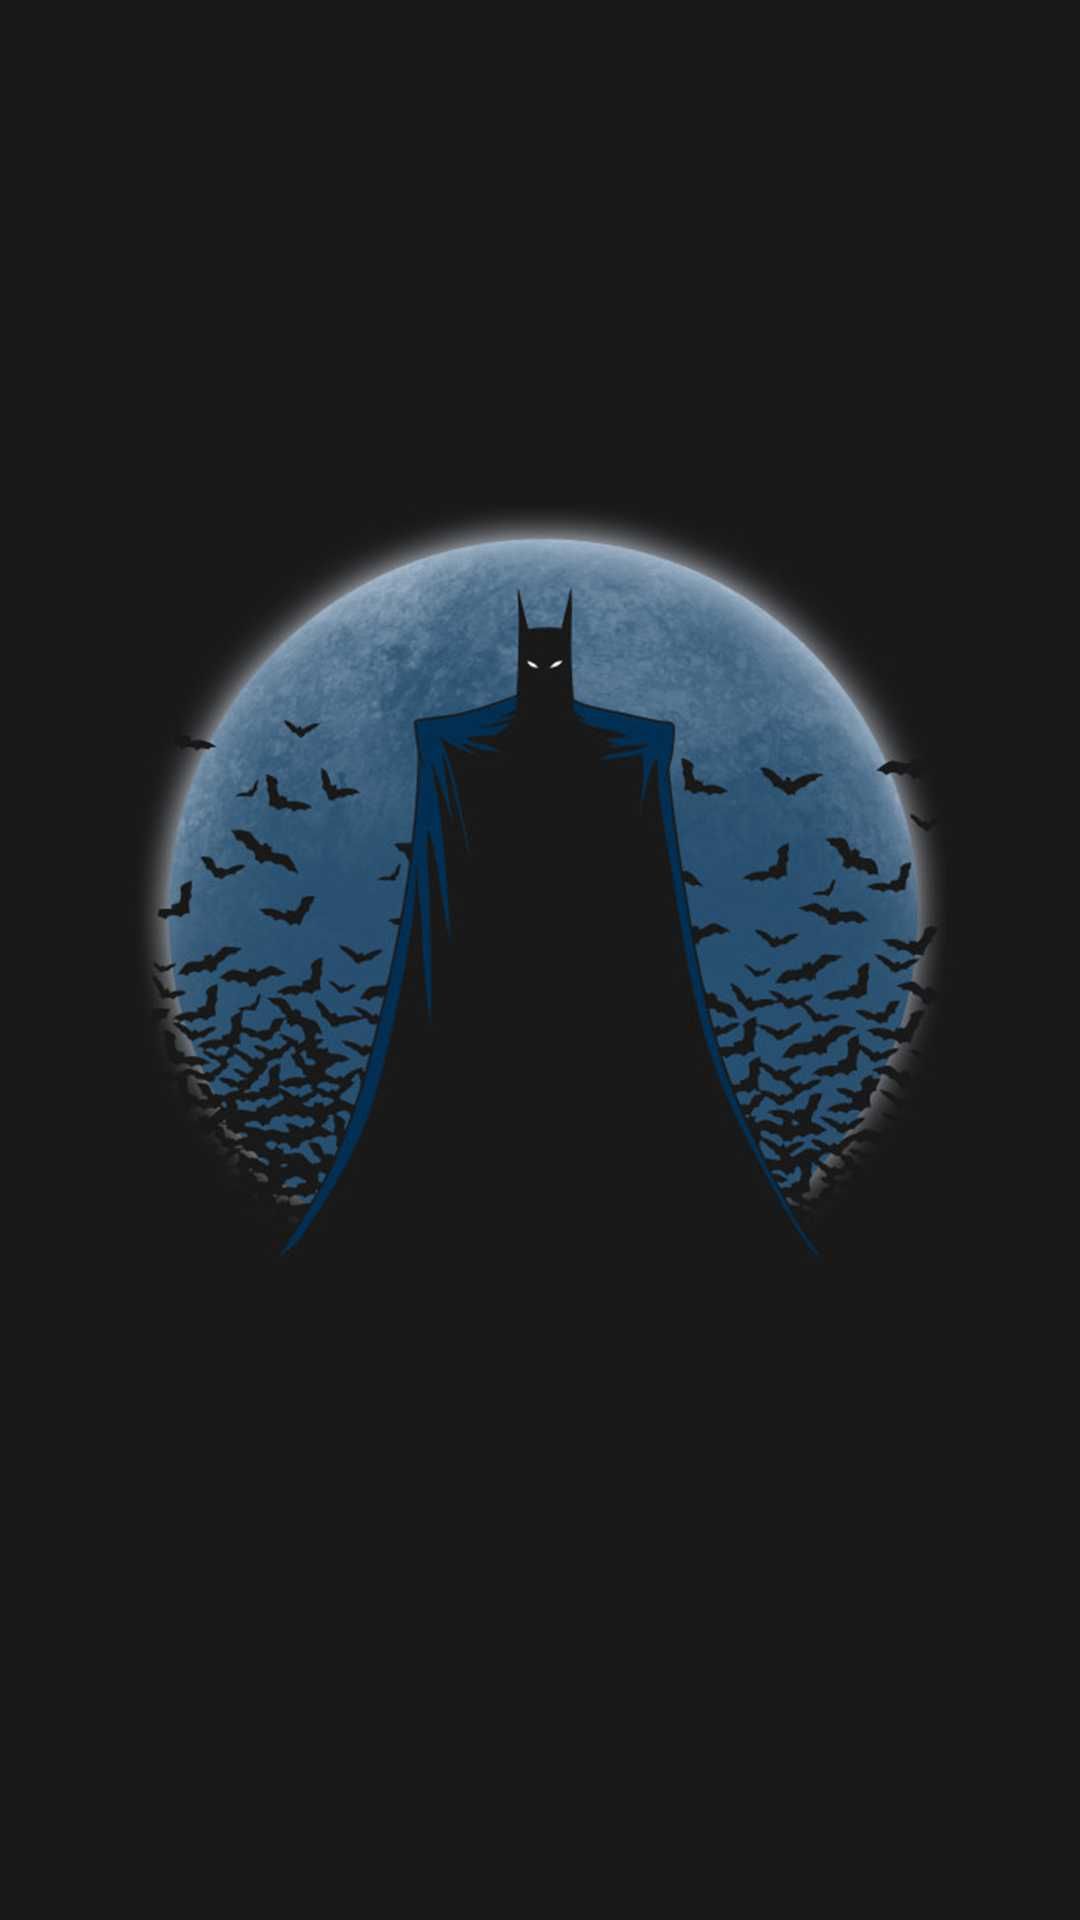 The Batman Minimal Dark Wallpaper Wallpaper, Android